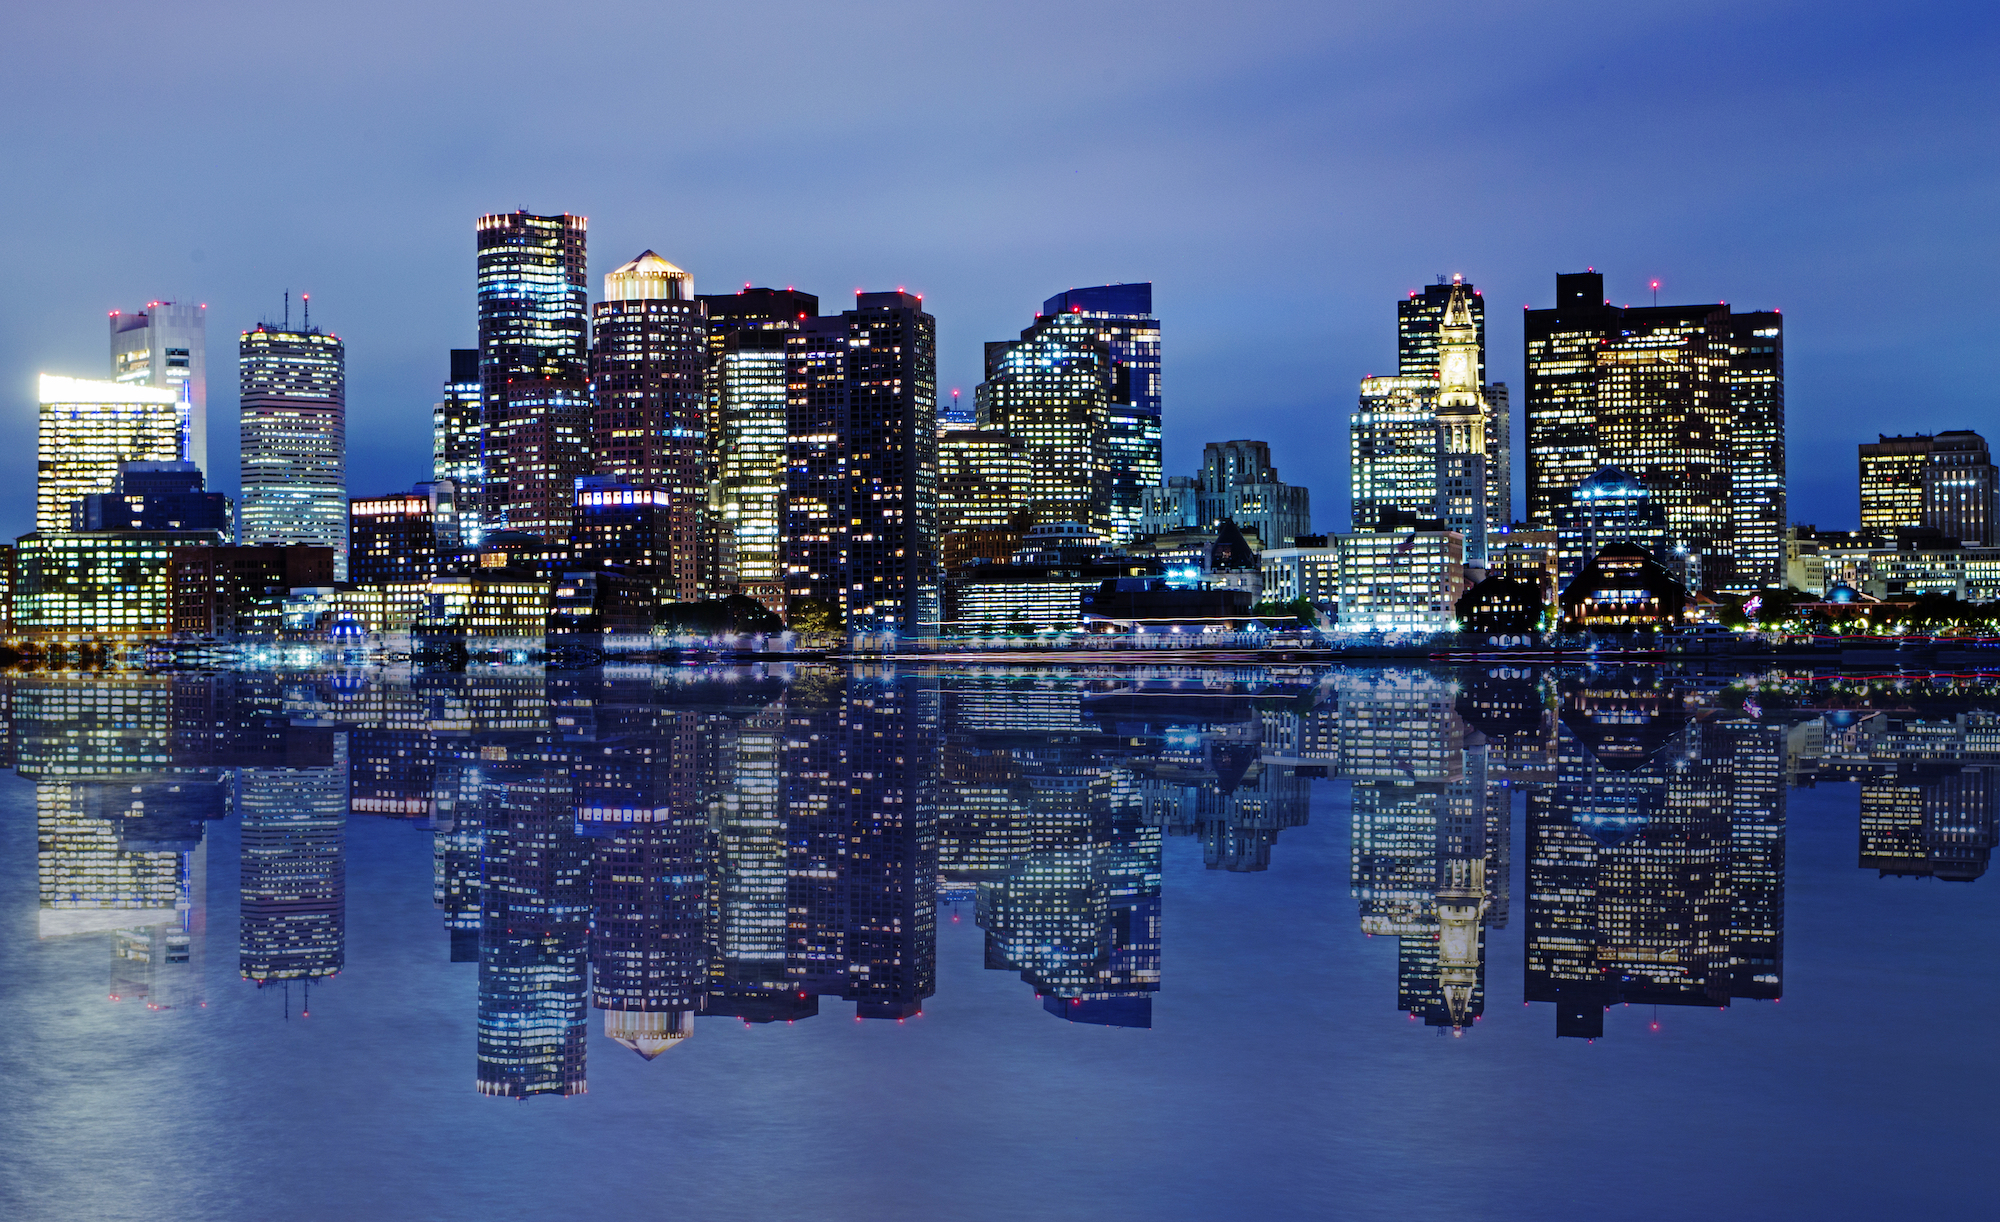 A nighttime photo of the Boston skyline.